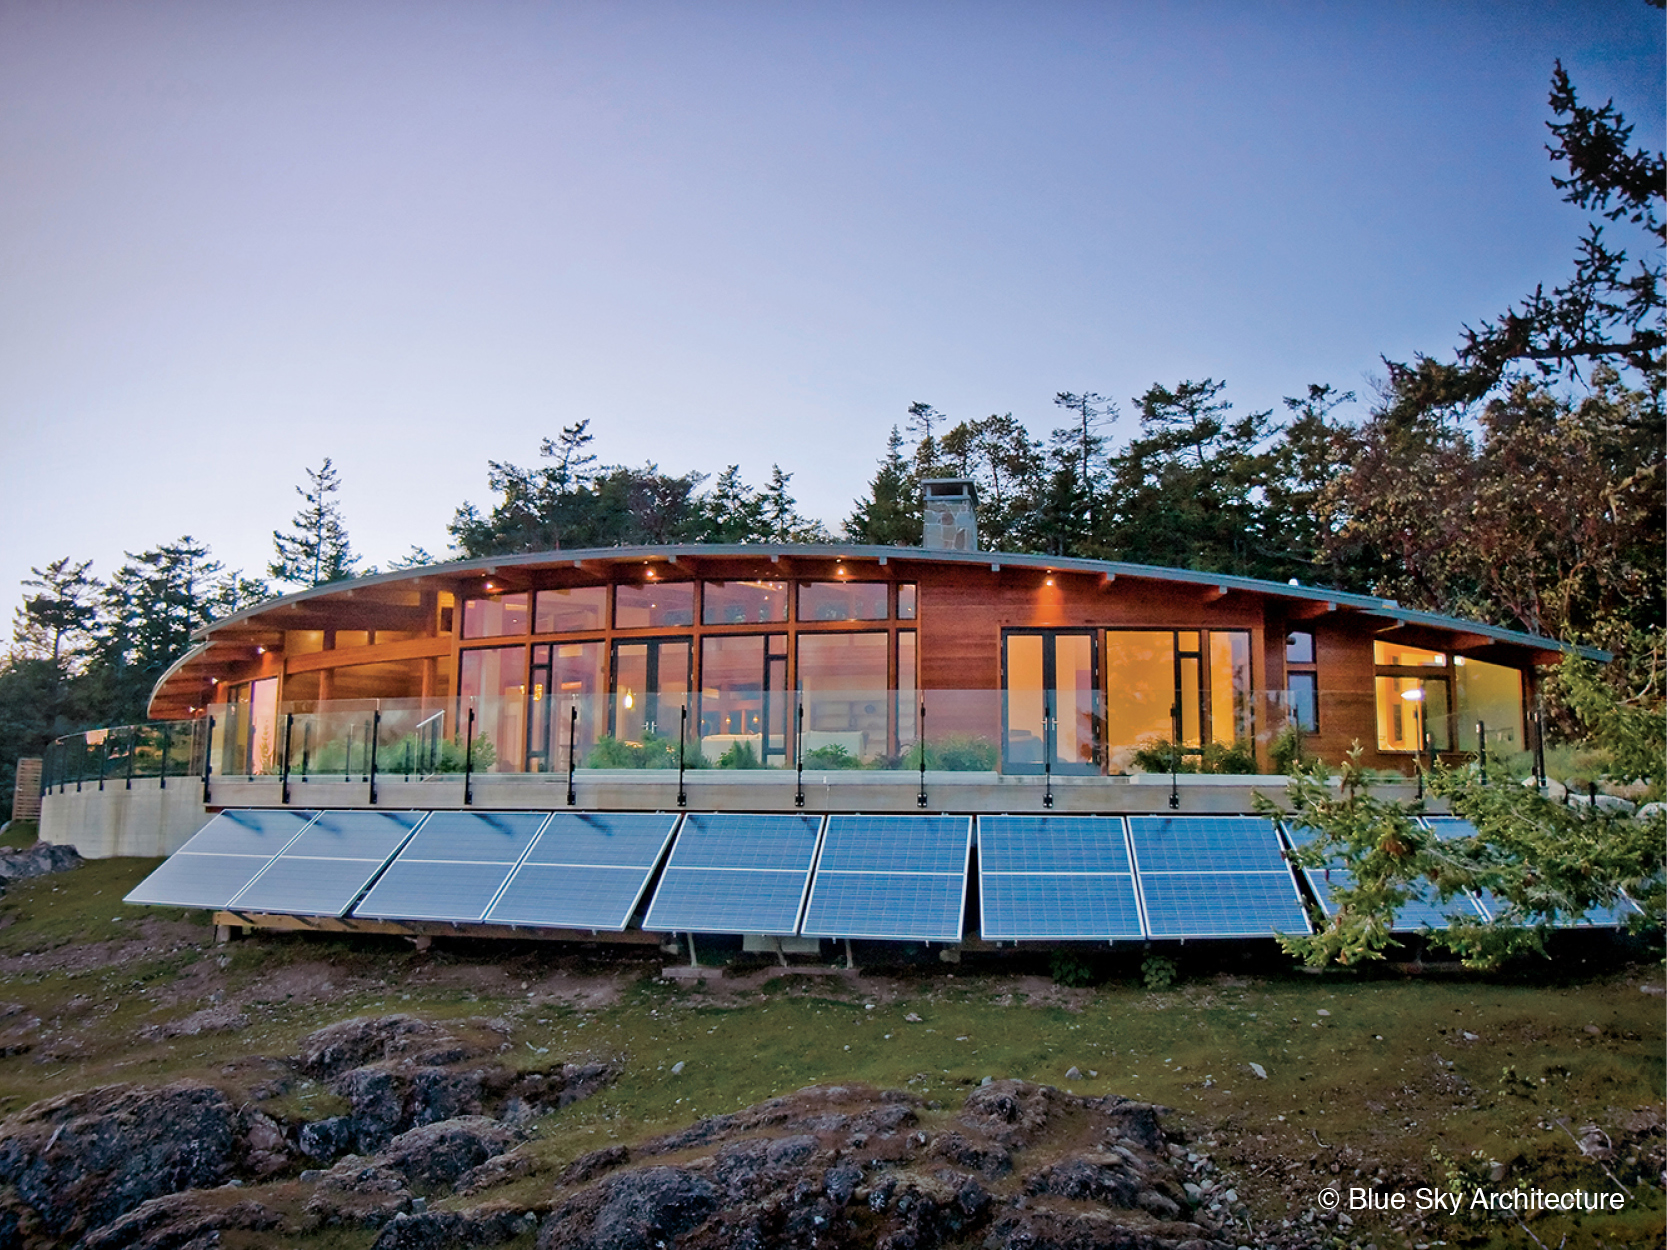 Solar panels on off-grid home design